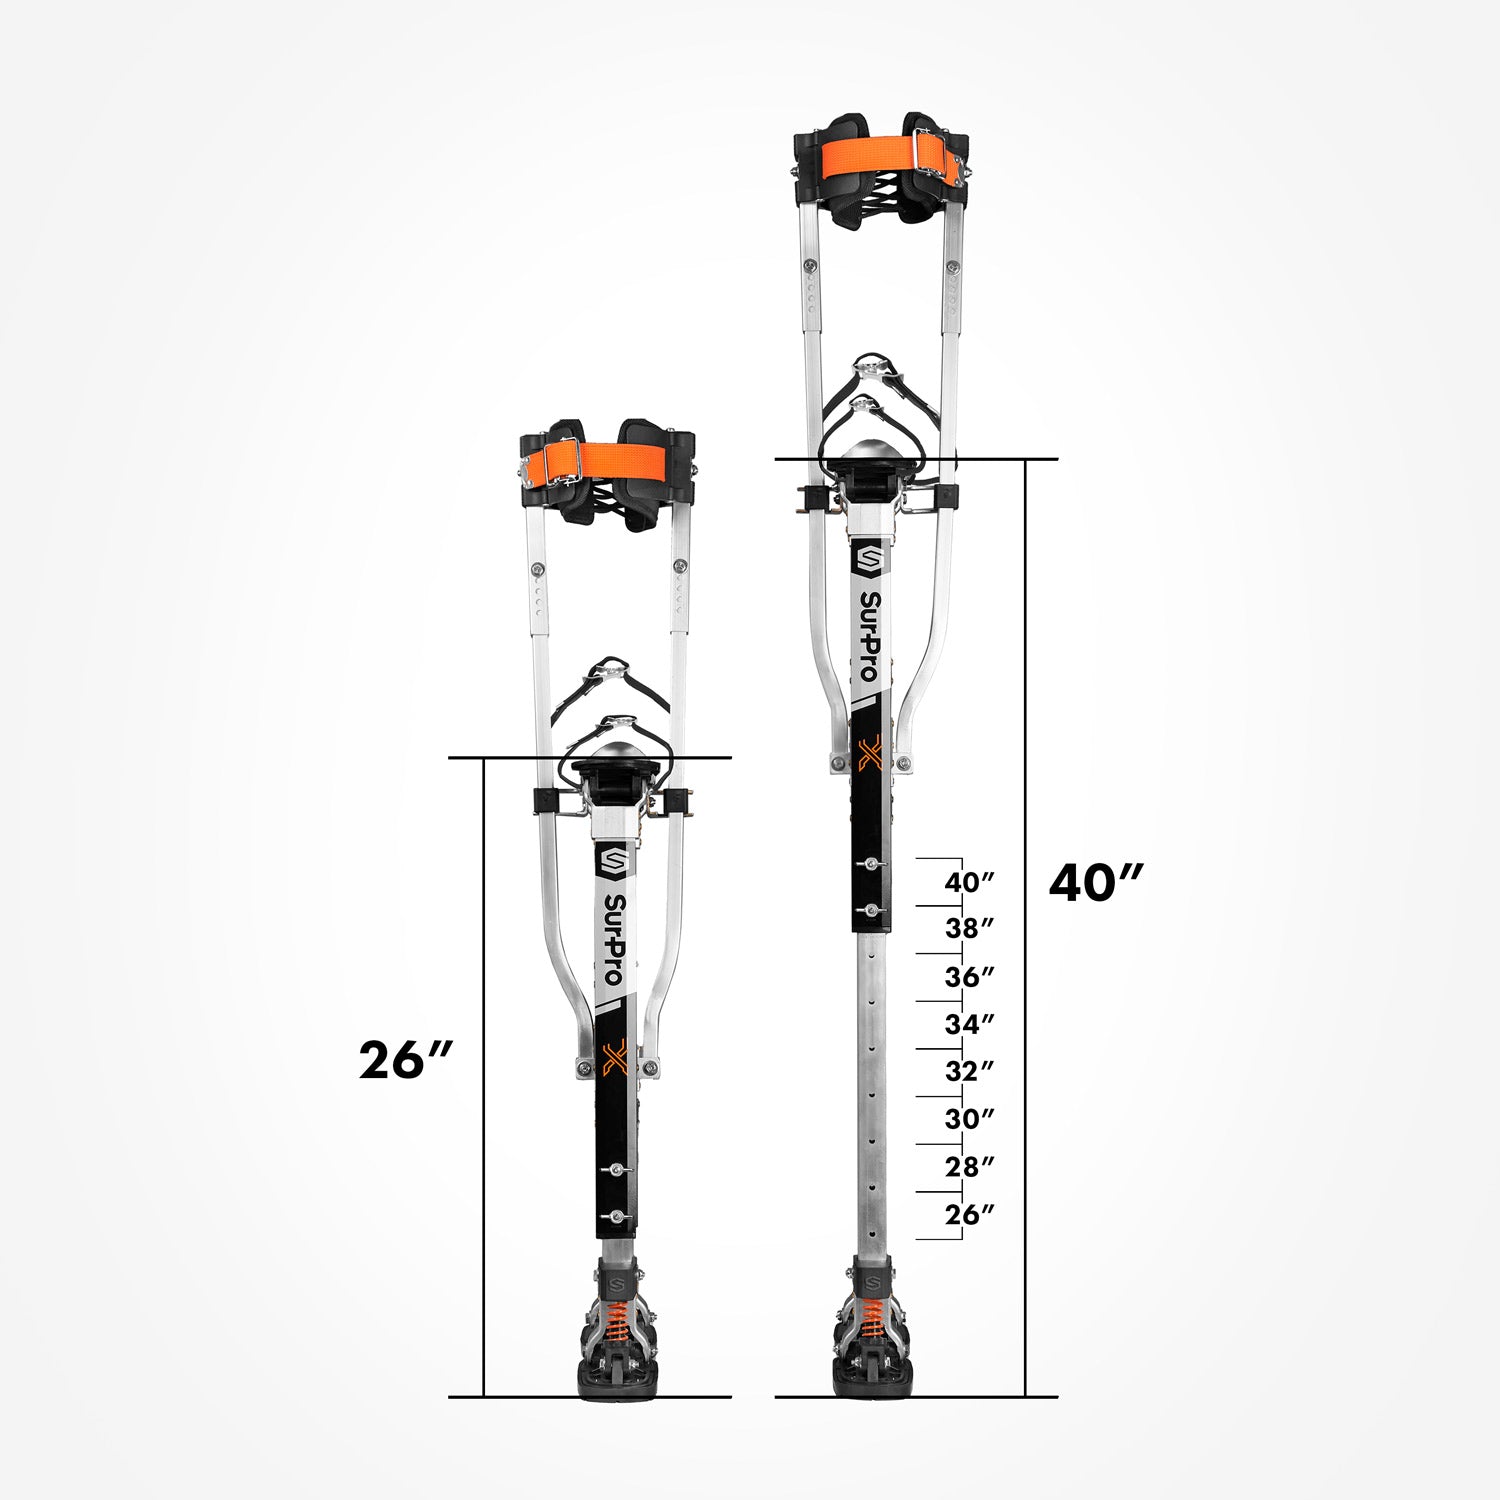 S2X Mag Stilts 26"-40" shown at minimum and maximum heights